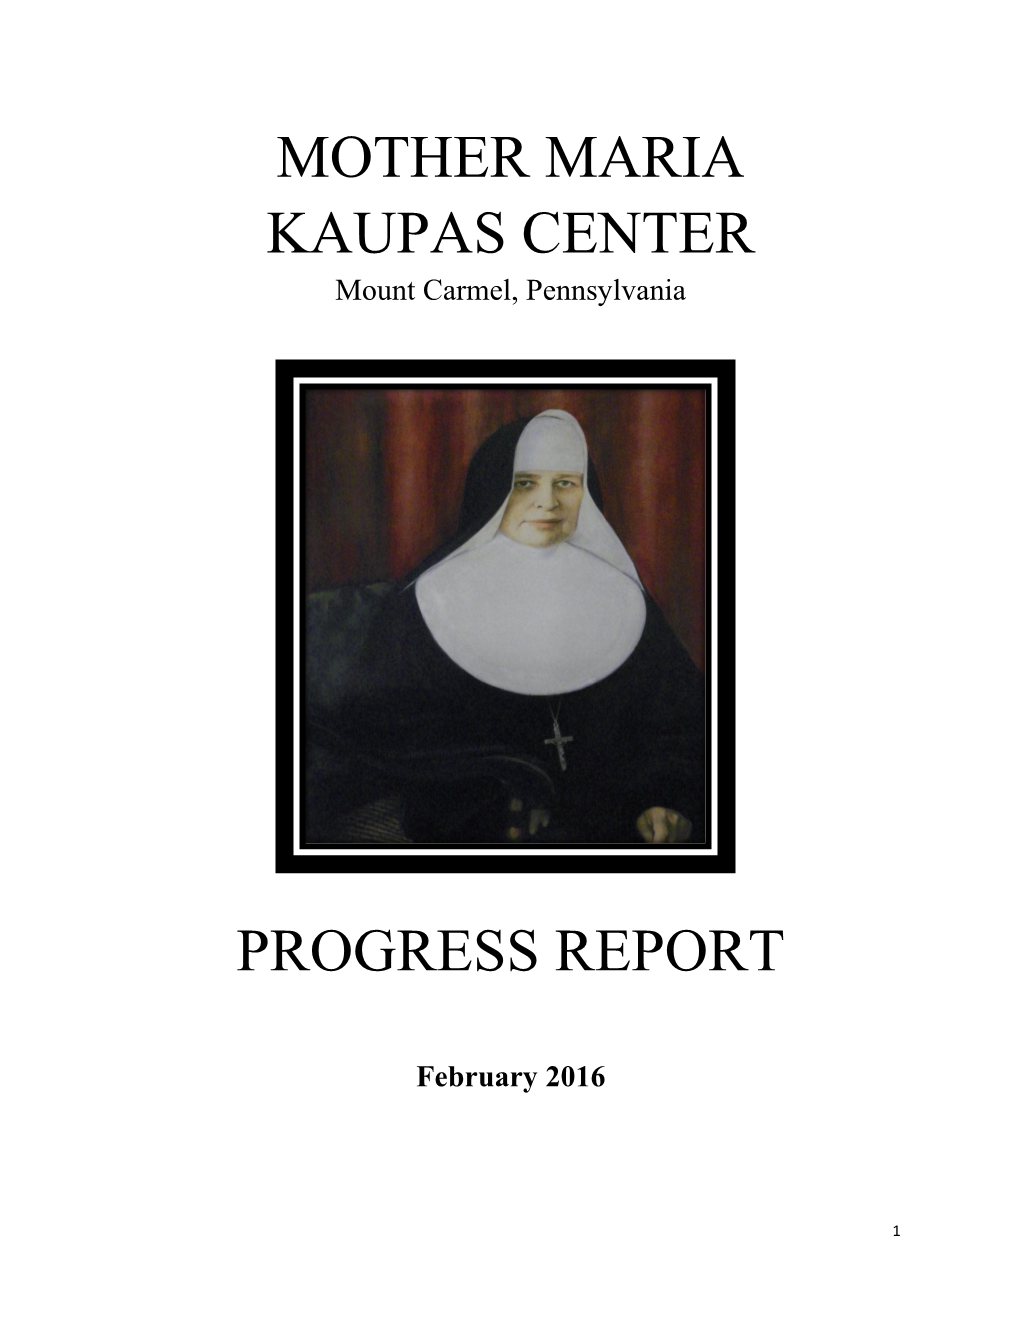 Mother Maria Kaupas Center 2016 Progress Report